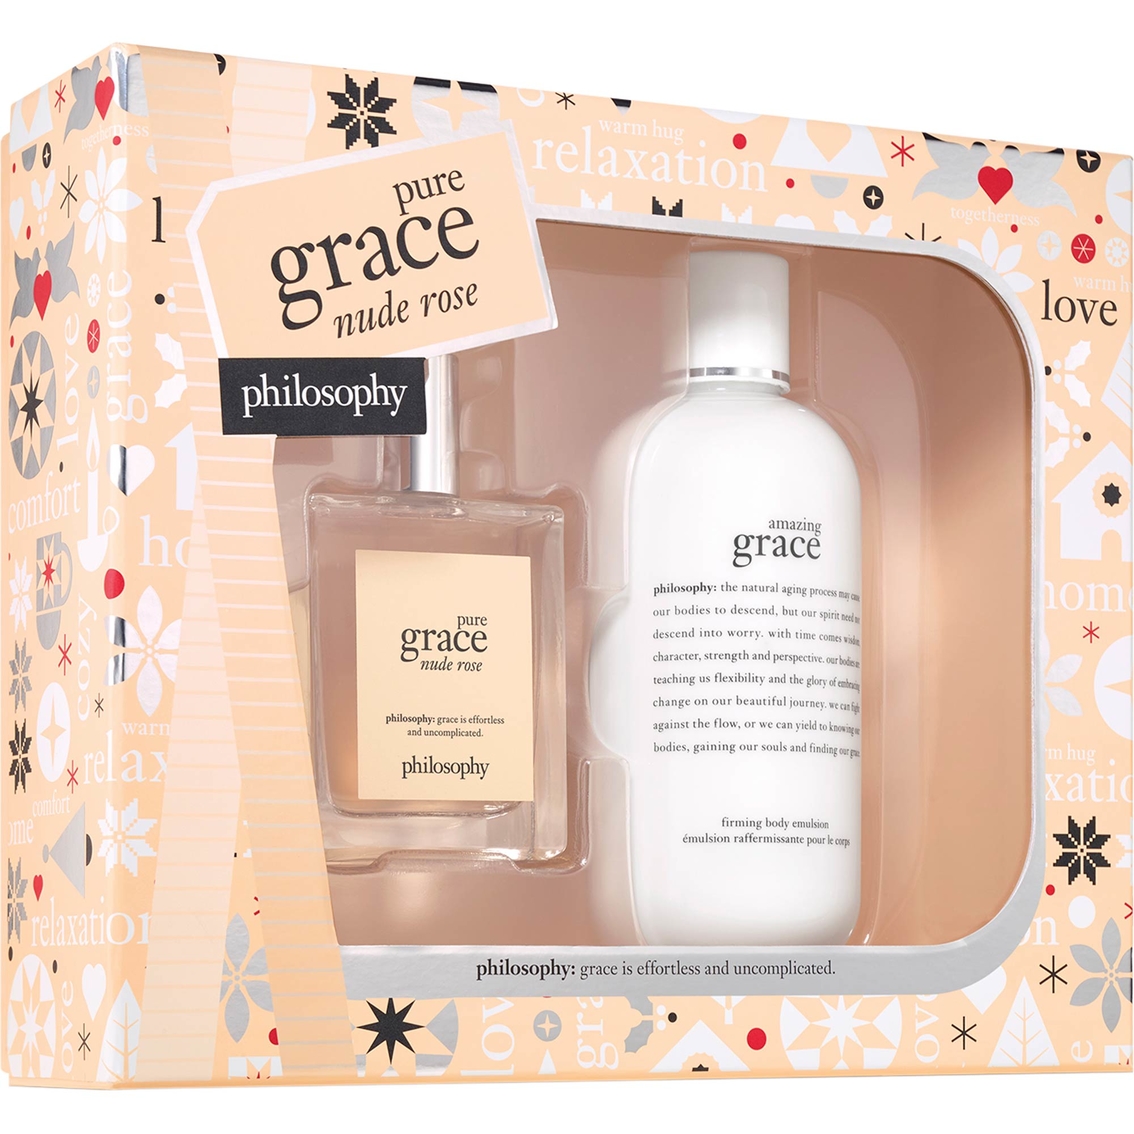 Philosophy Pure Grace Nude Rose 2 Pc. Gift Set, Sets